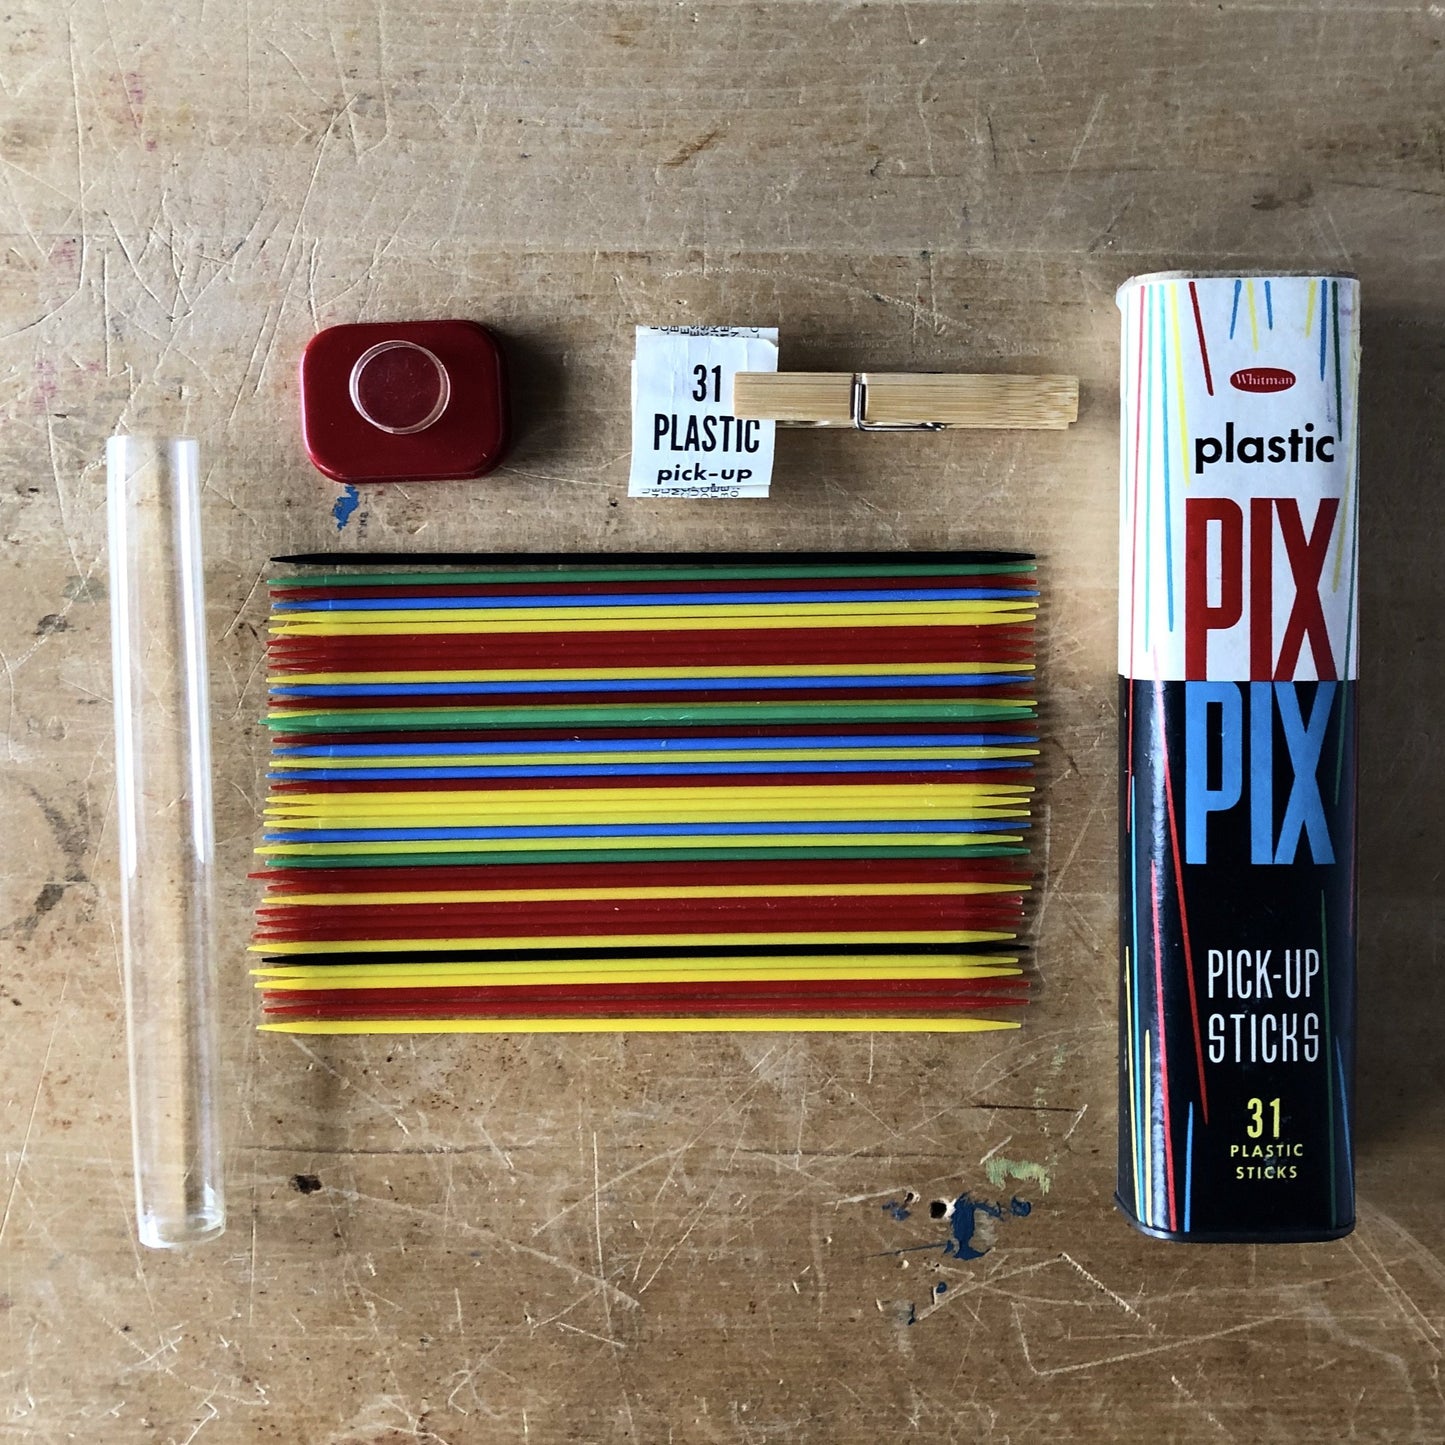 Vintage Pix Pix Pick-Up Sticks Game (c.1960s)